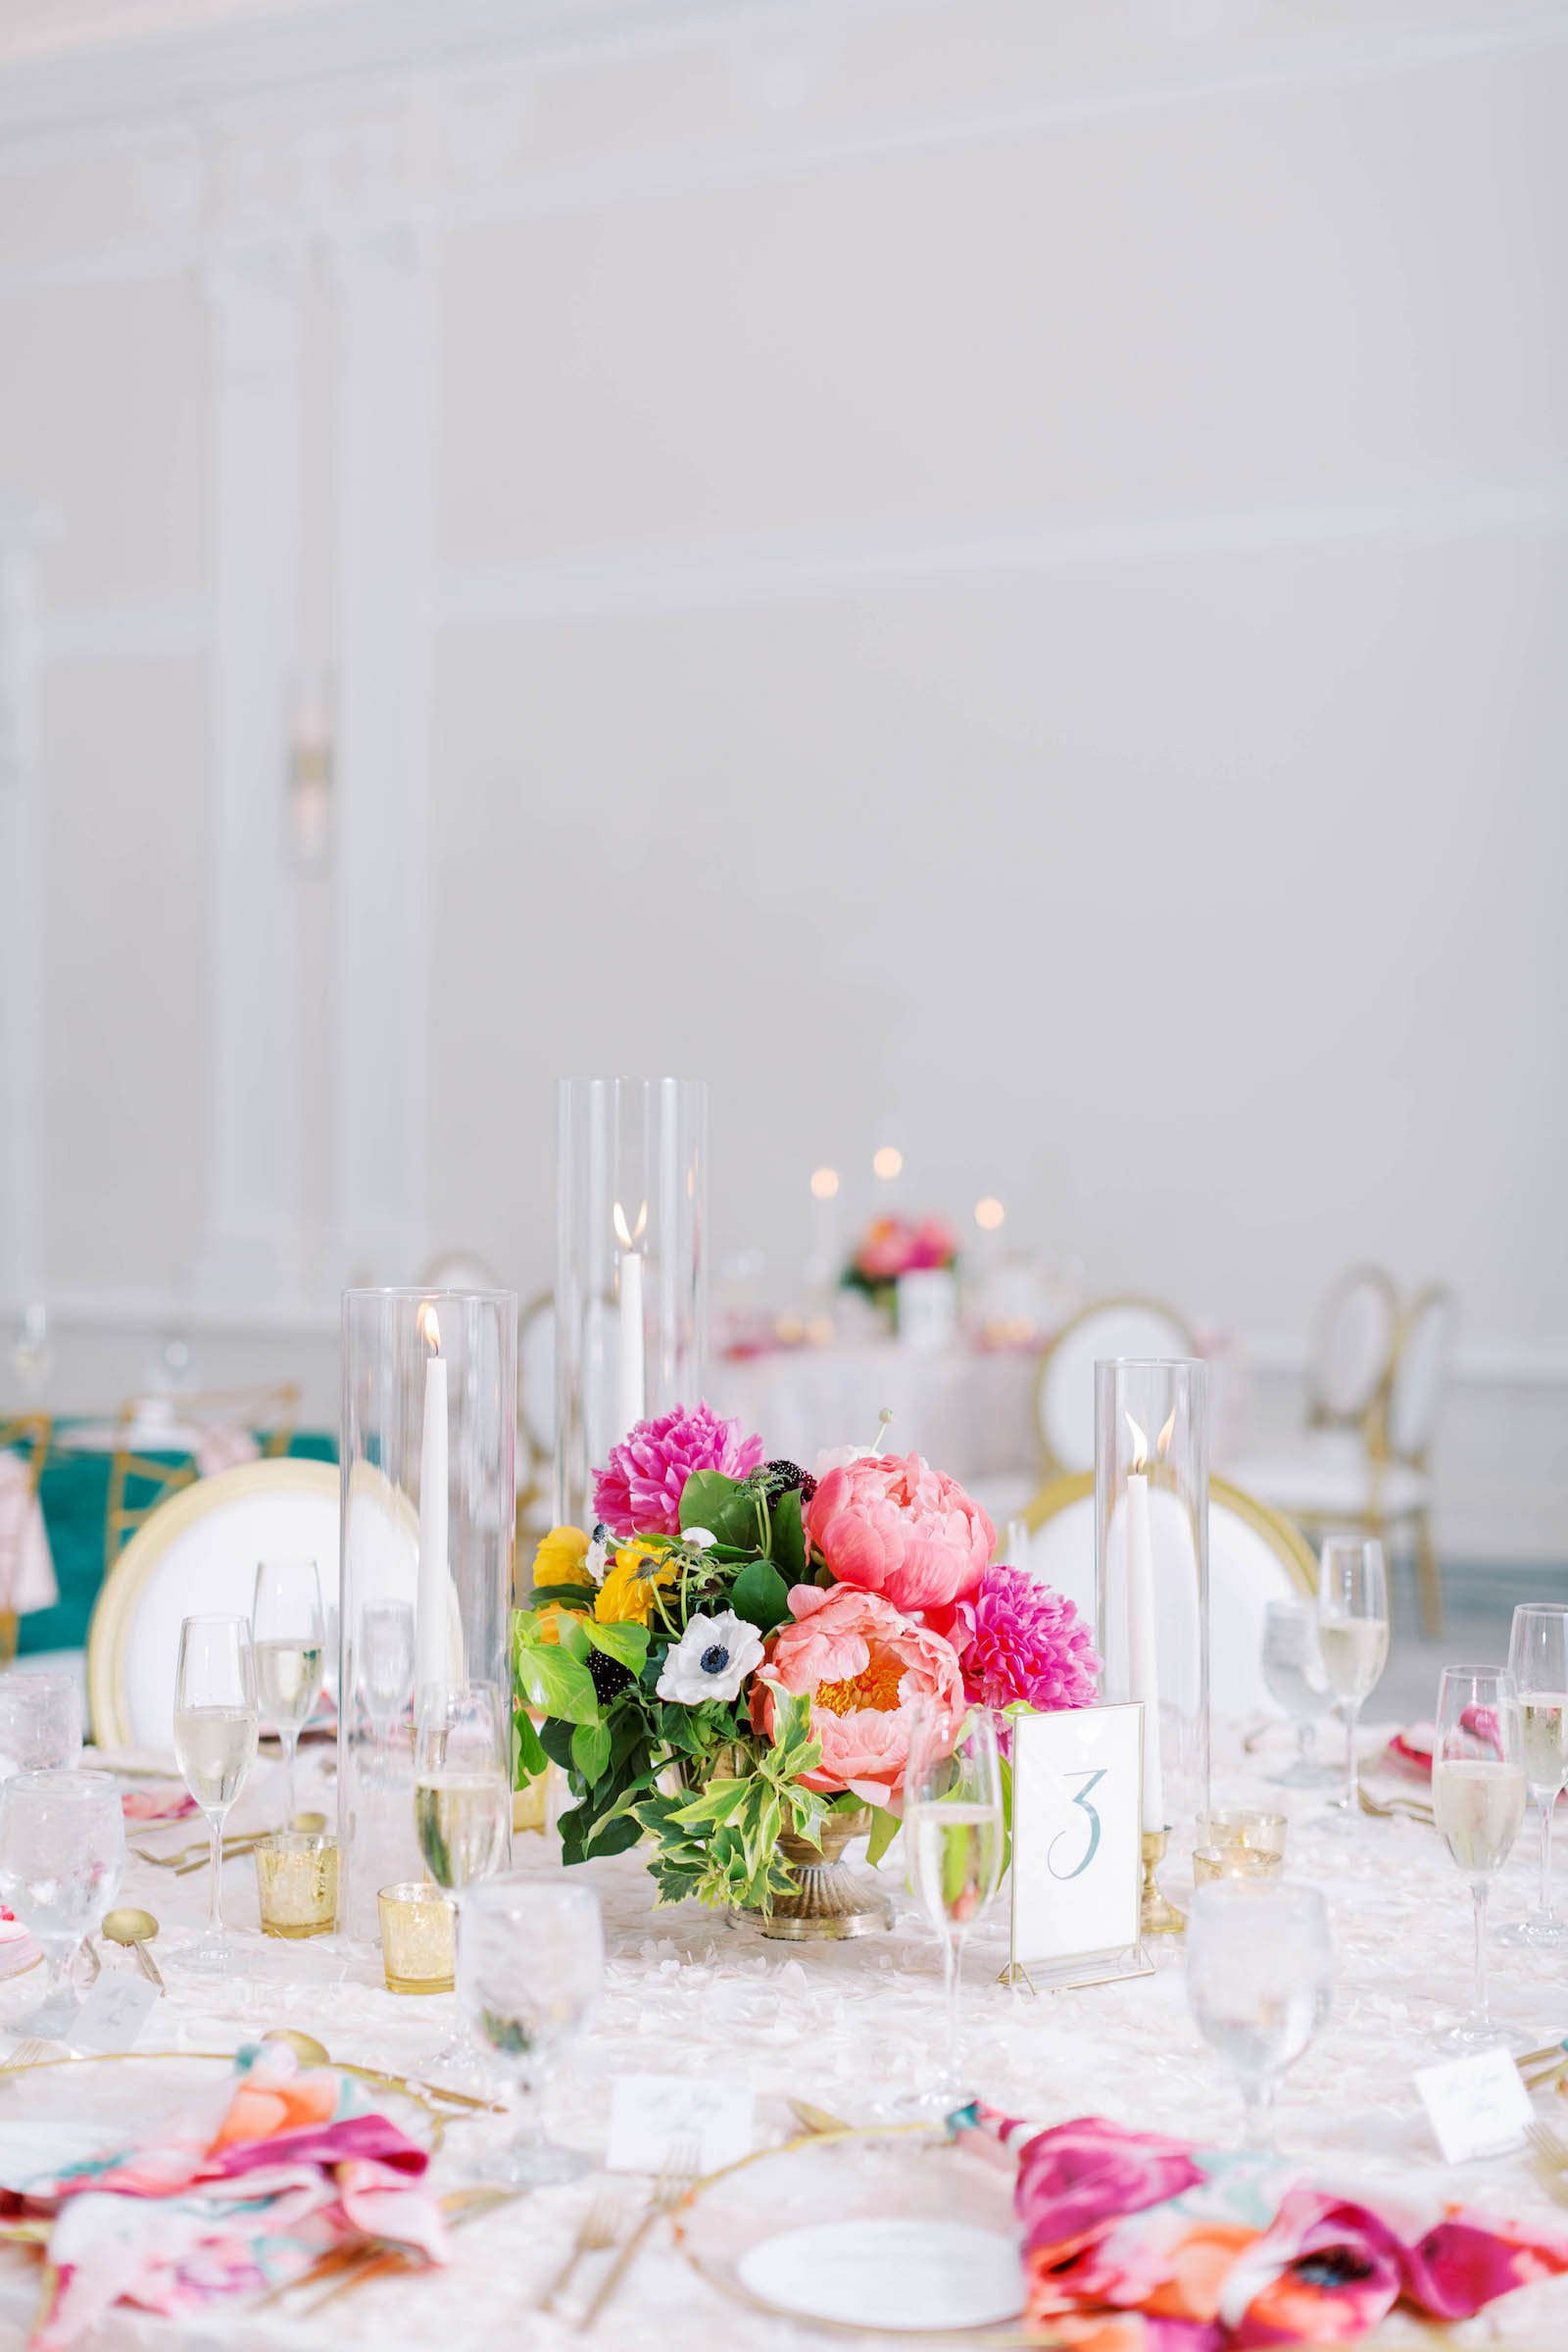 Vibrant Pink and Emerald Wedding Reception Centerpiece Decor Ideas | Tampa Bay Planner Parties A La Carte